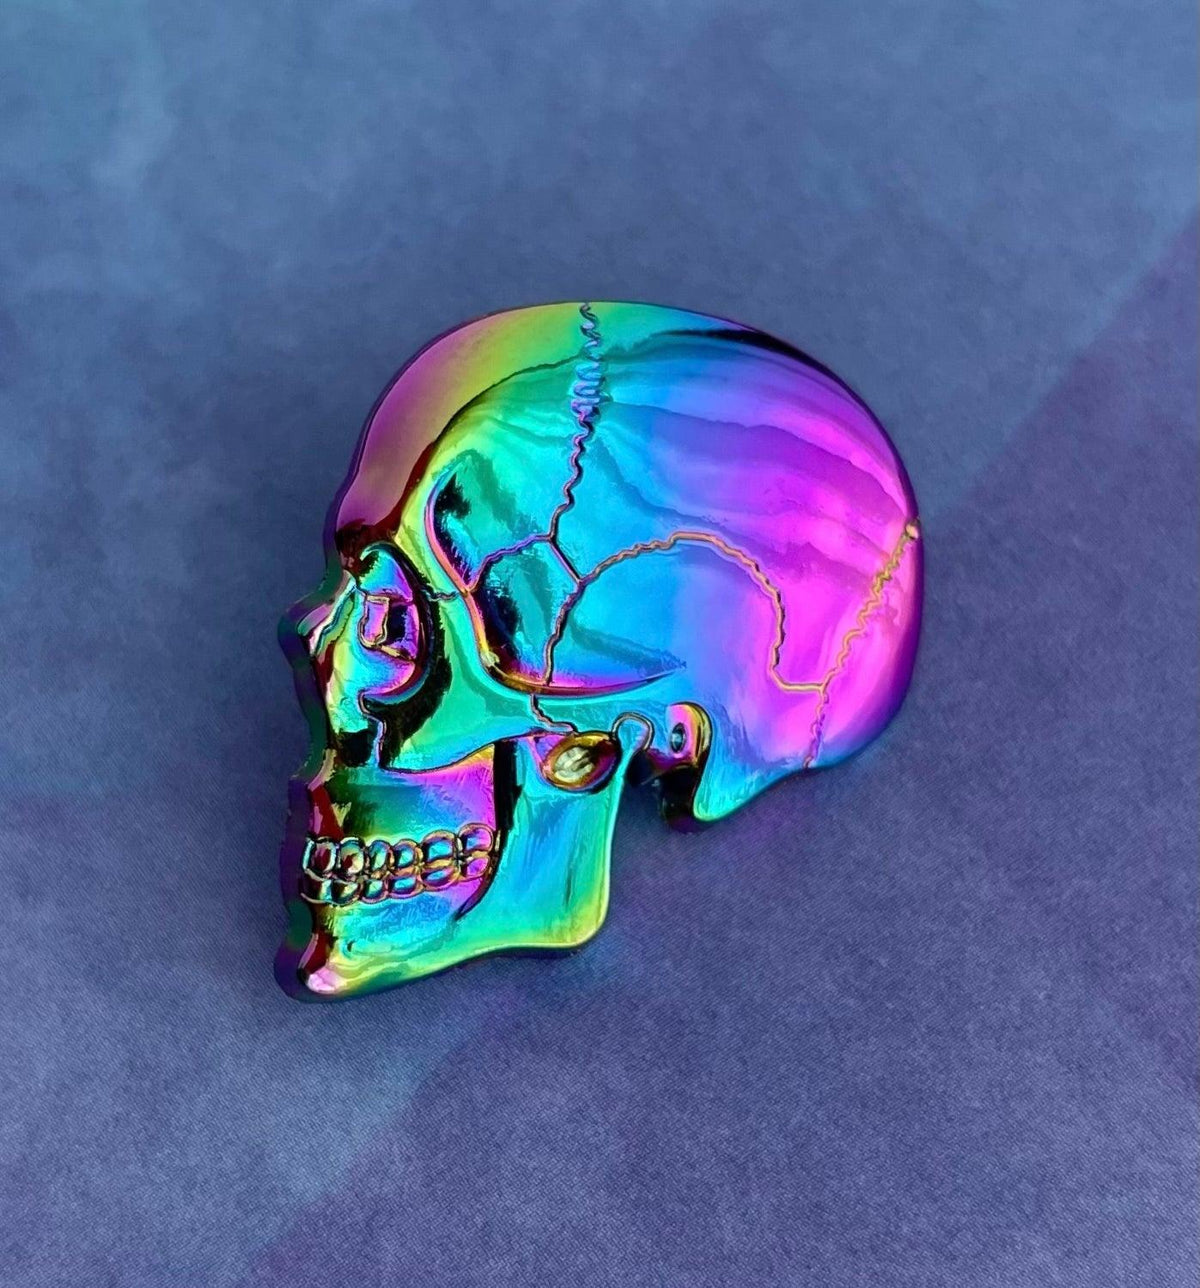 3D Textbook Anatomy Skull Pin - Rainbow Anodized! - Rad Girl Creations